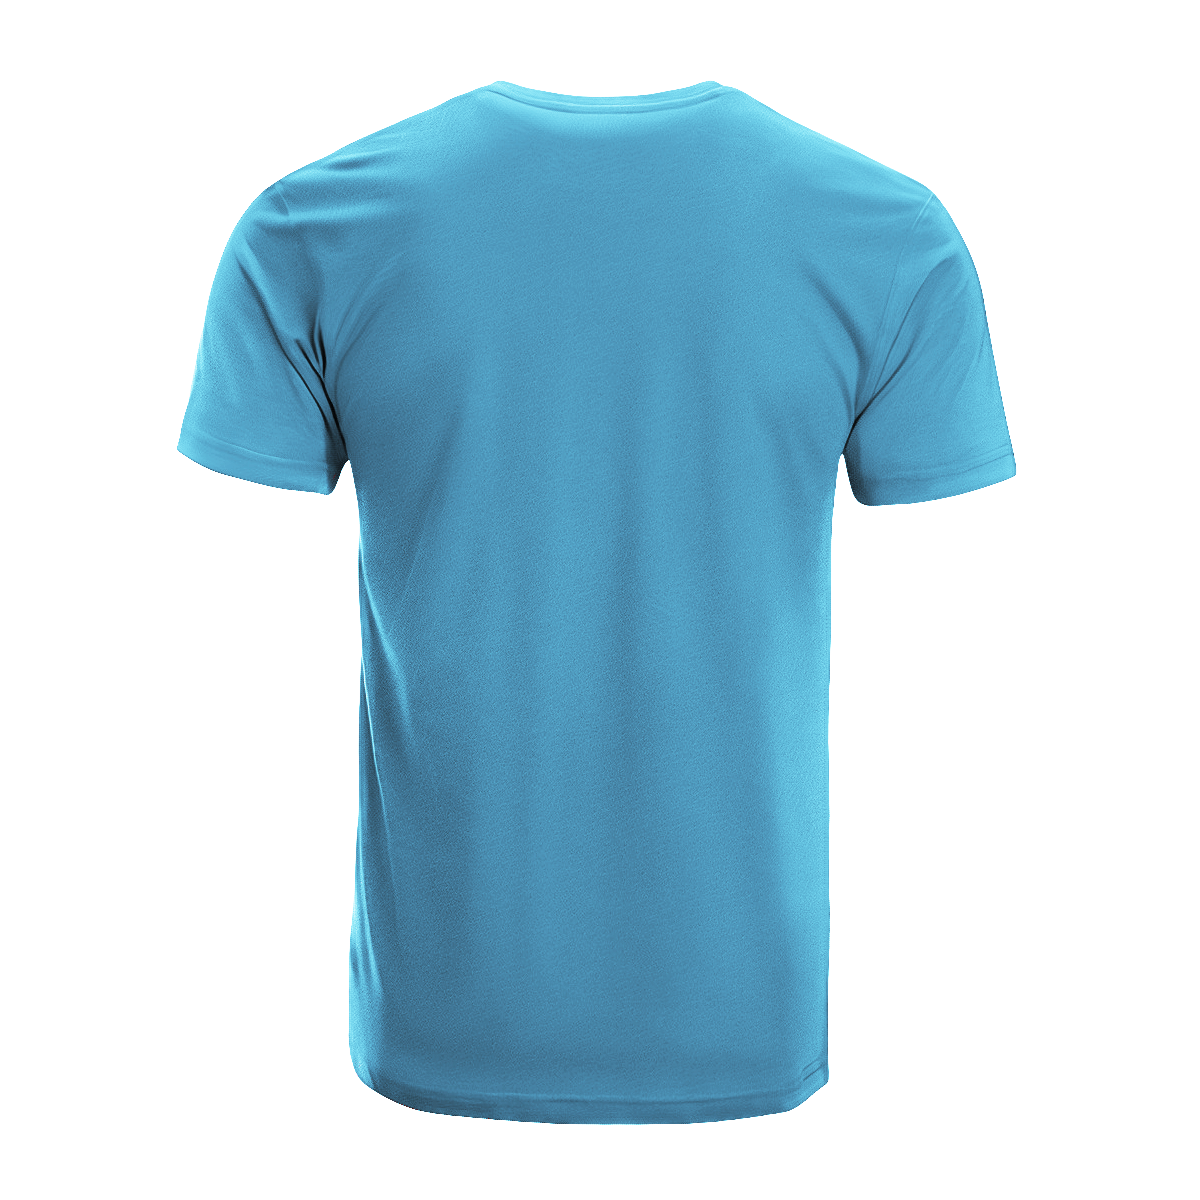 Aikenhead Tartan Crest T-shirt - I'm not yelling style